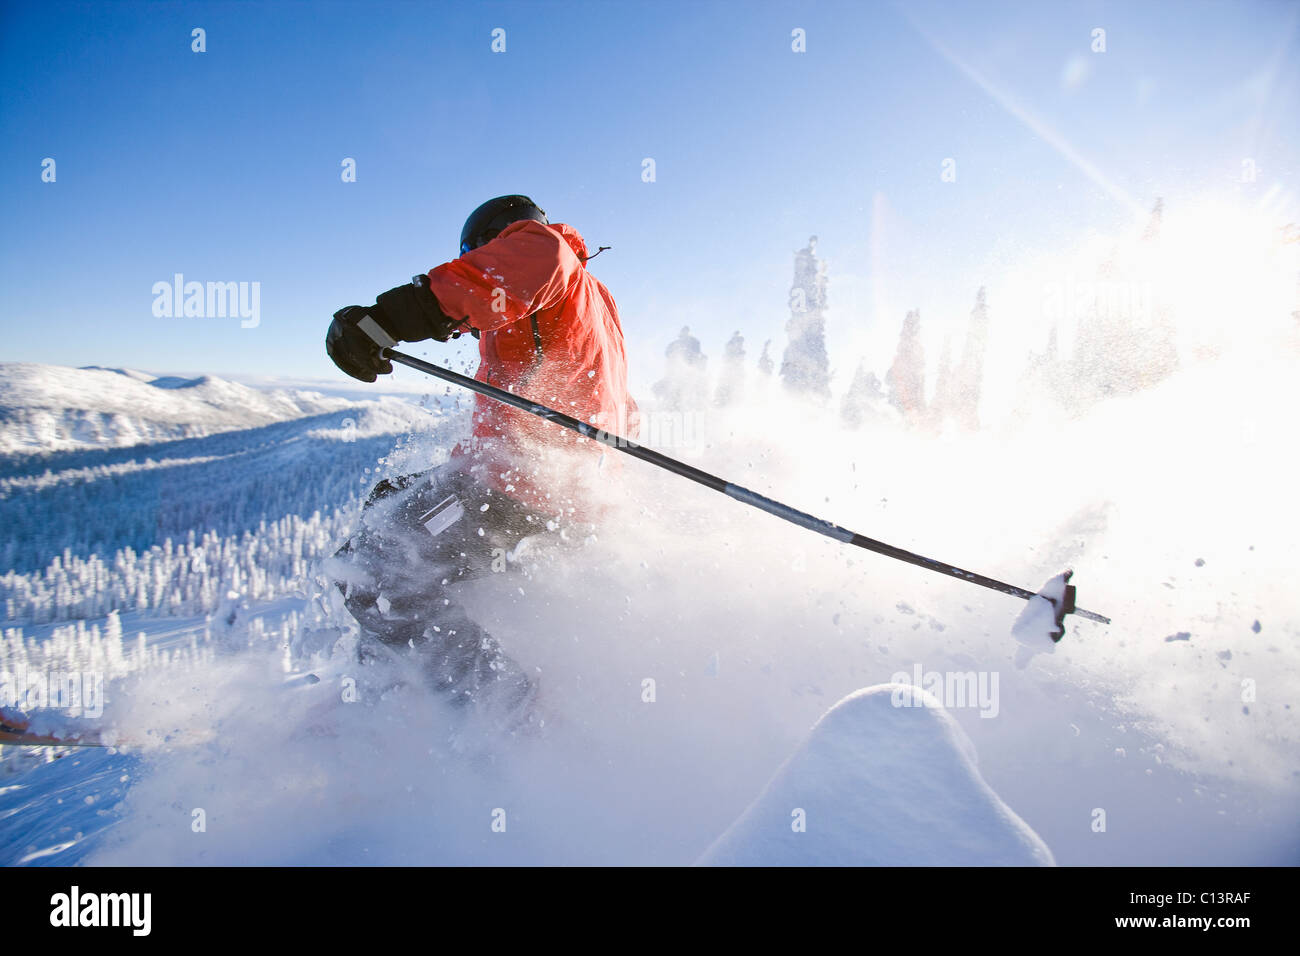 USA, Montana, Whitefish, skier on slope Stock Photo